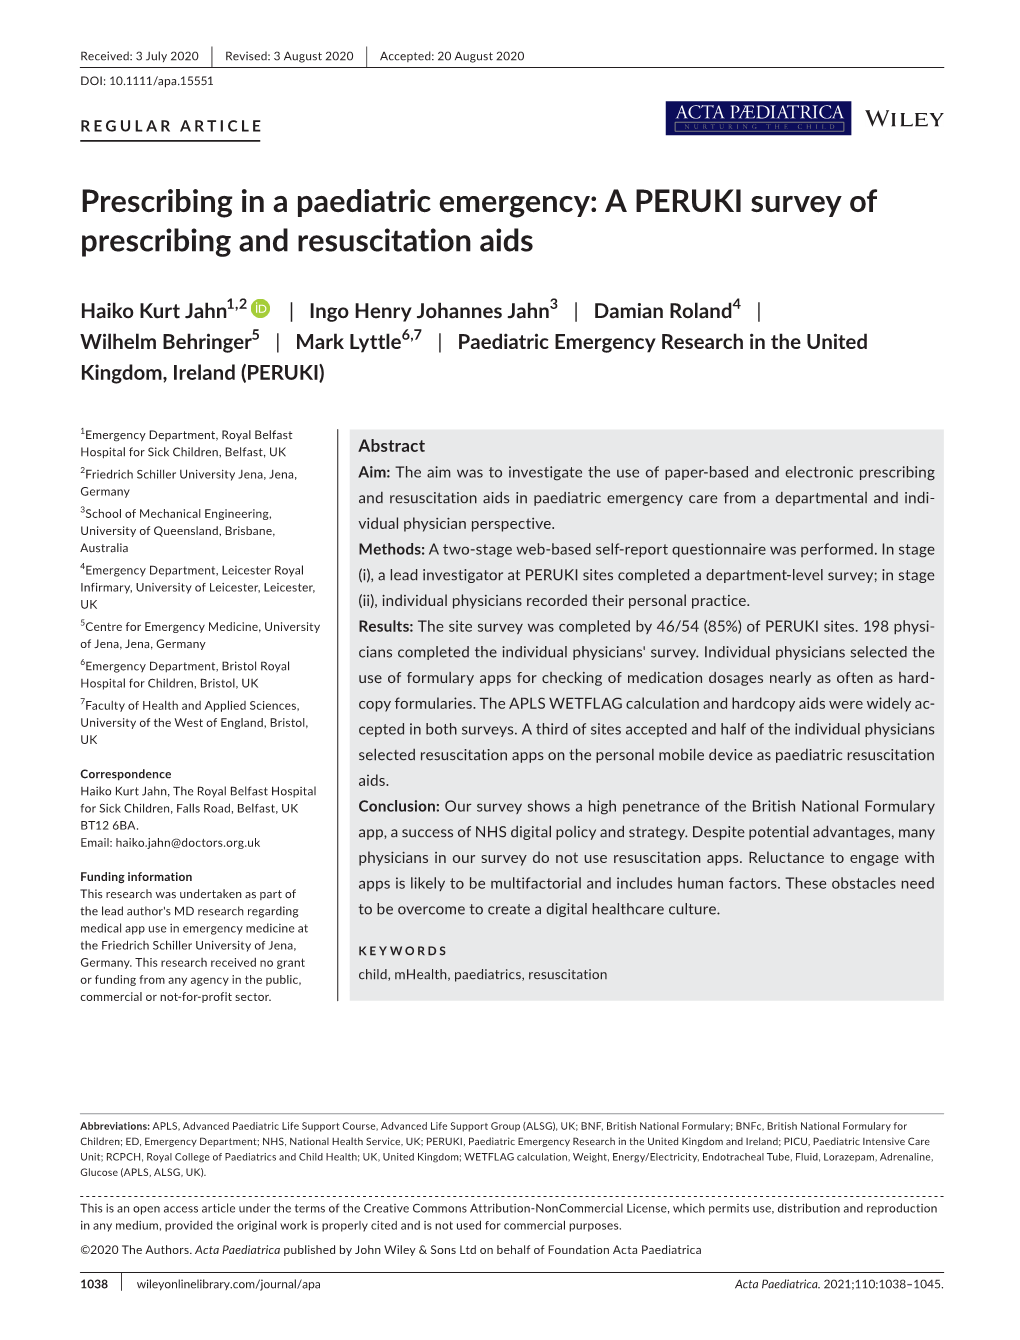 Prescribing in a Paediatric Emergency: a PERUKI Survey of Prescribing and Resuscitation Aids